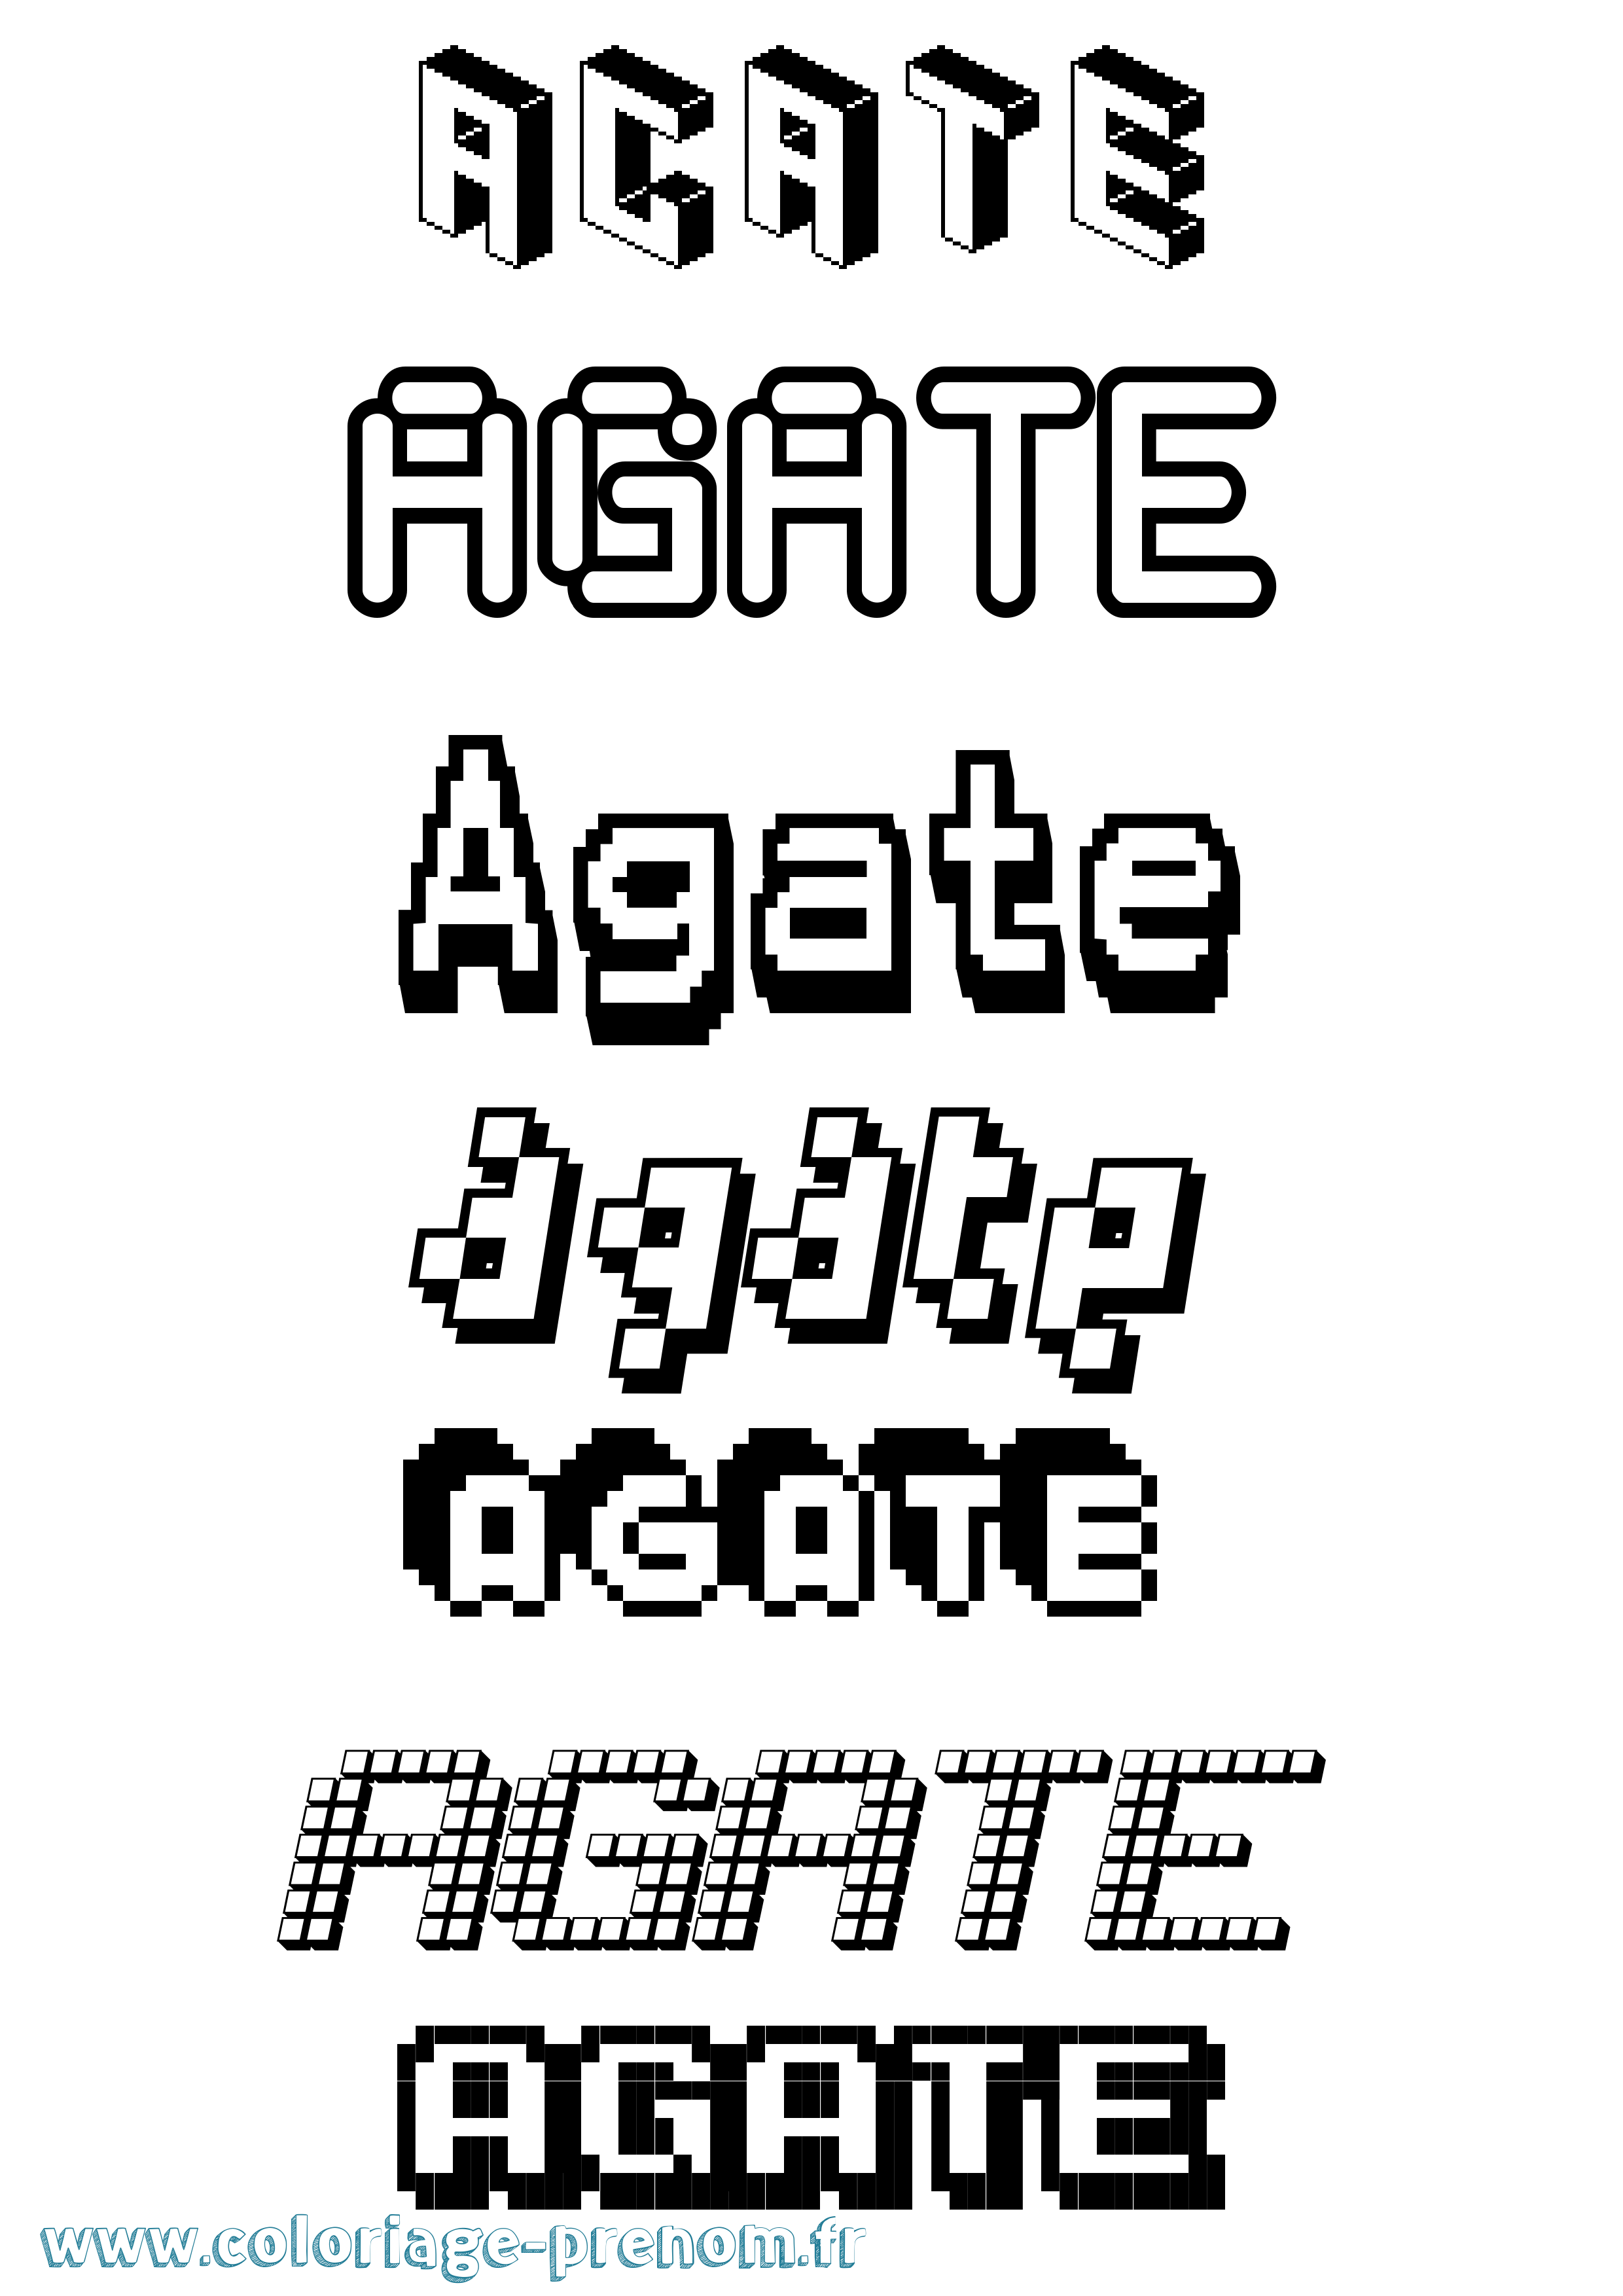 Coloriage prénom Agate Pixel